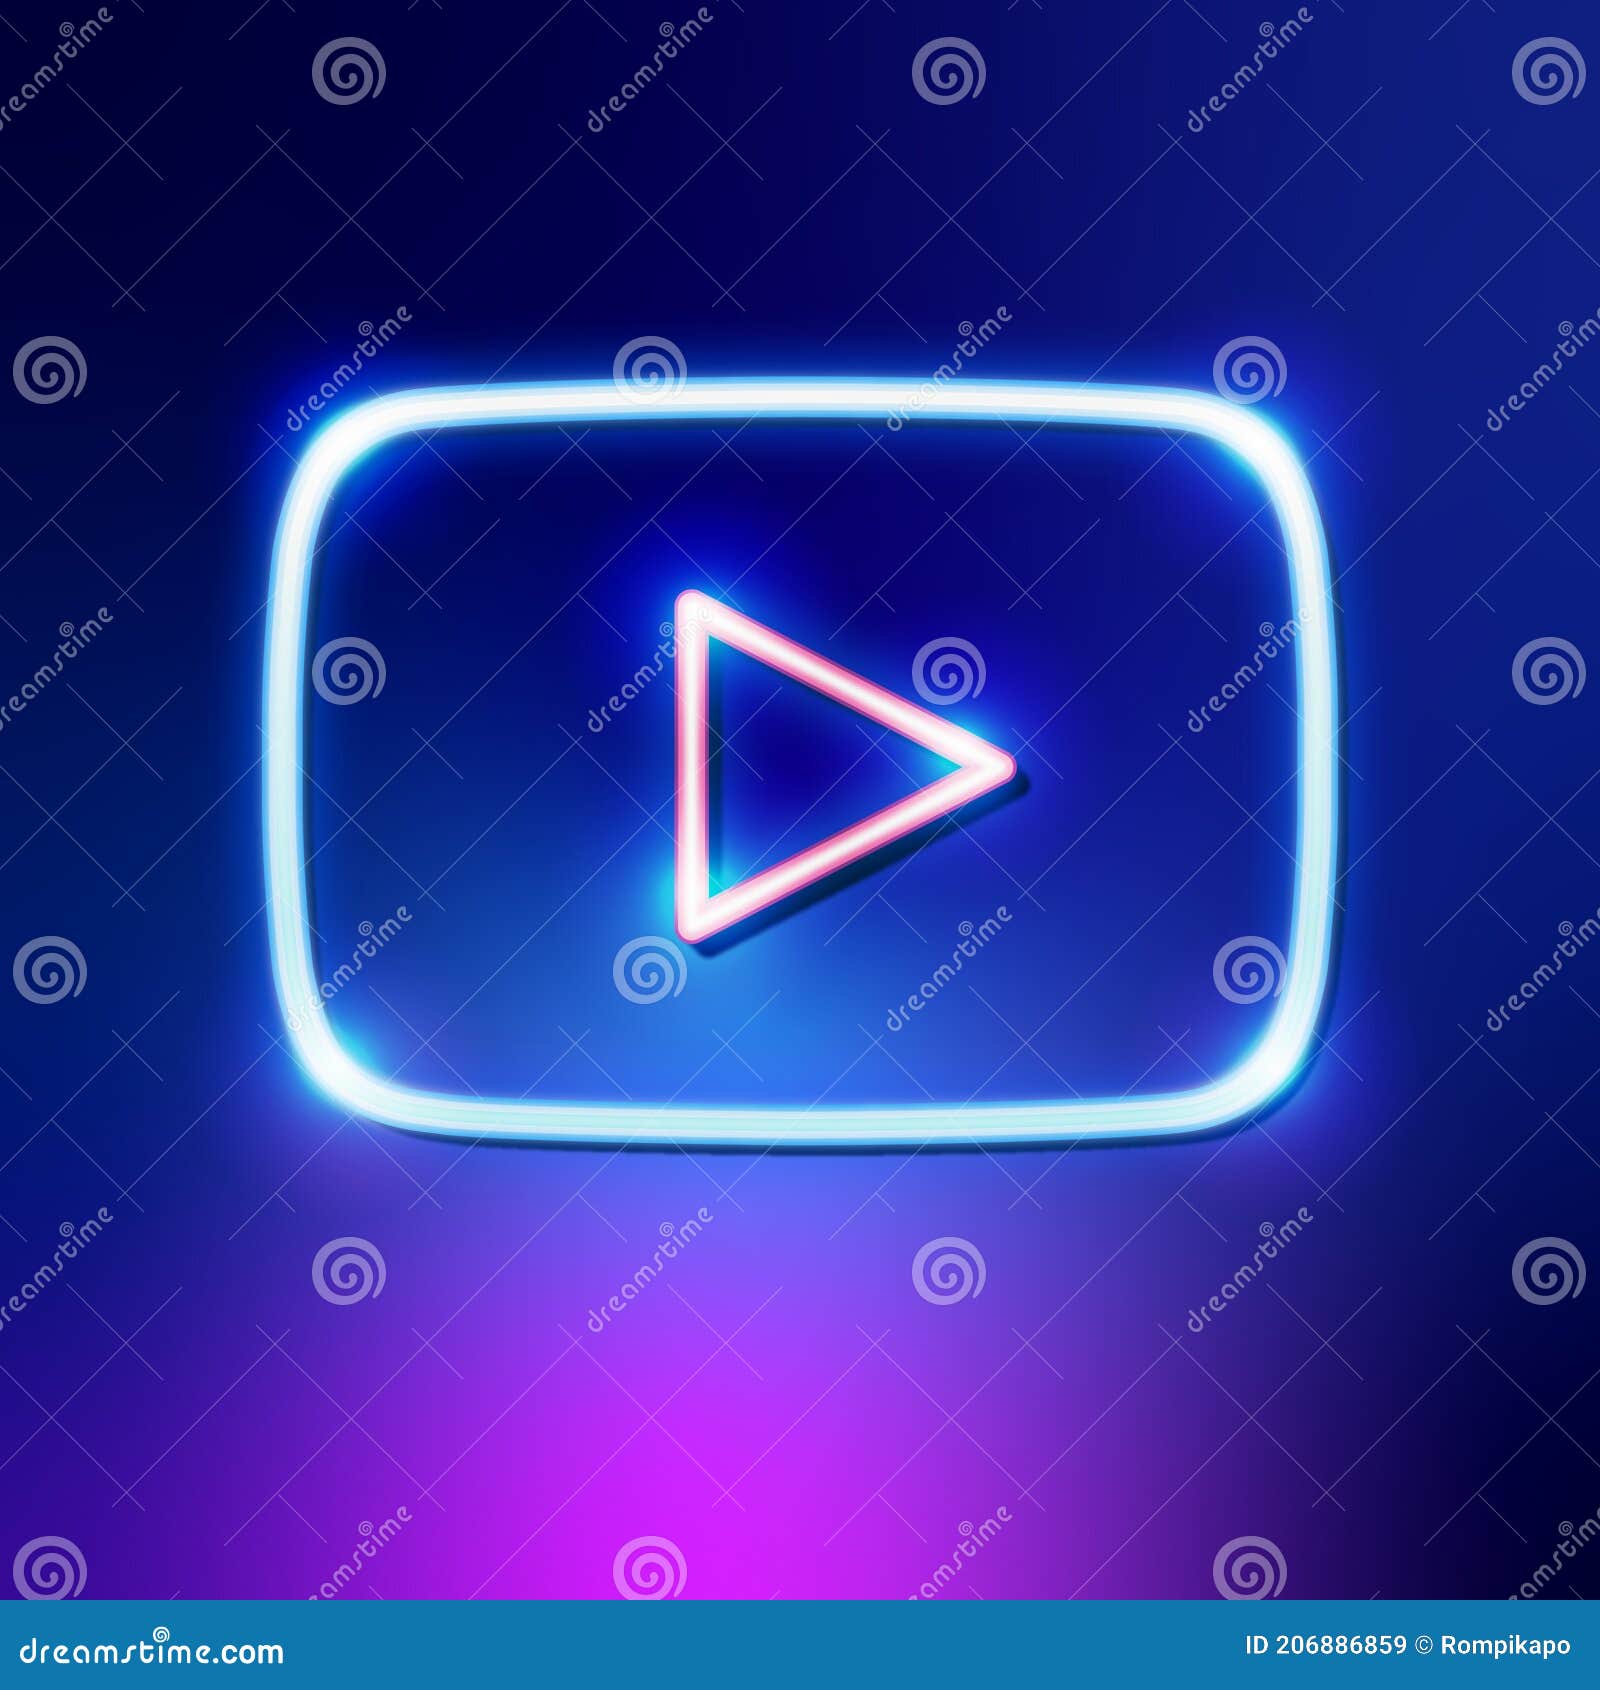 Dark Blue YouTube icon | App store icon, App icon, Ios app icon design